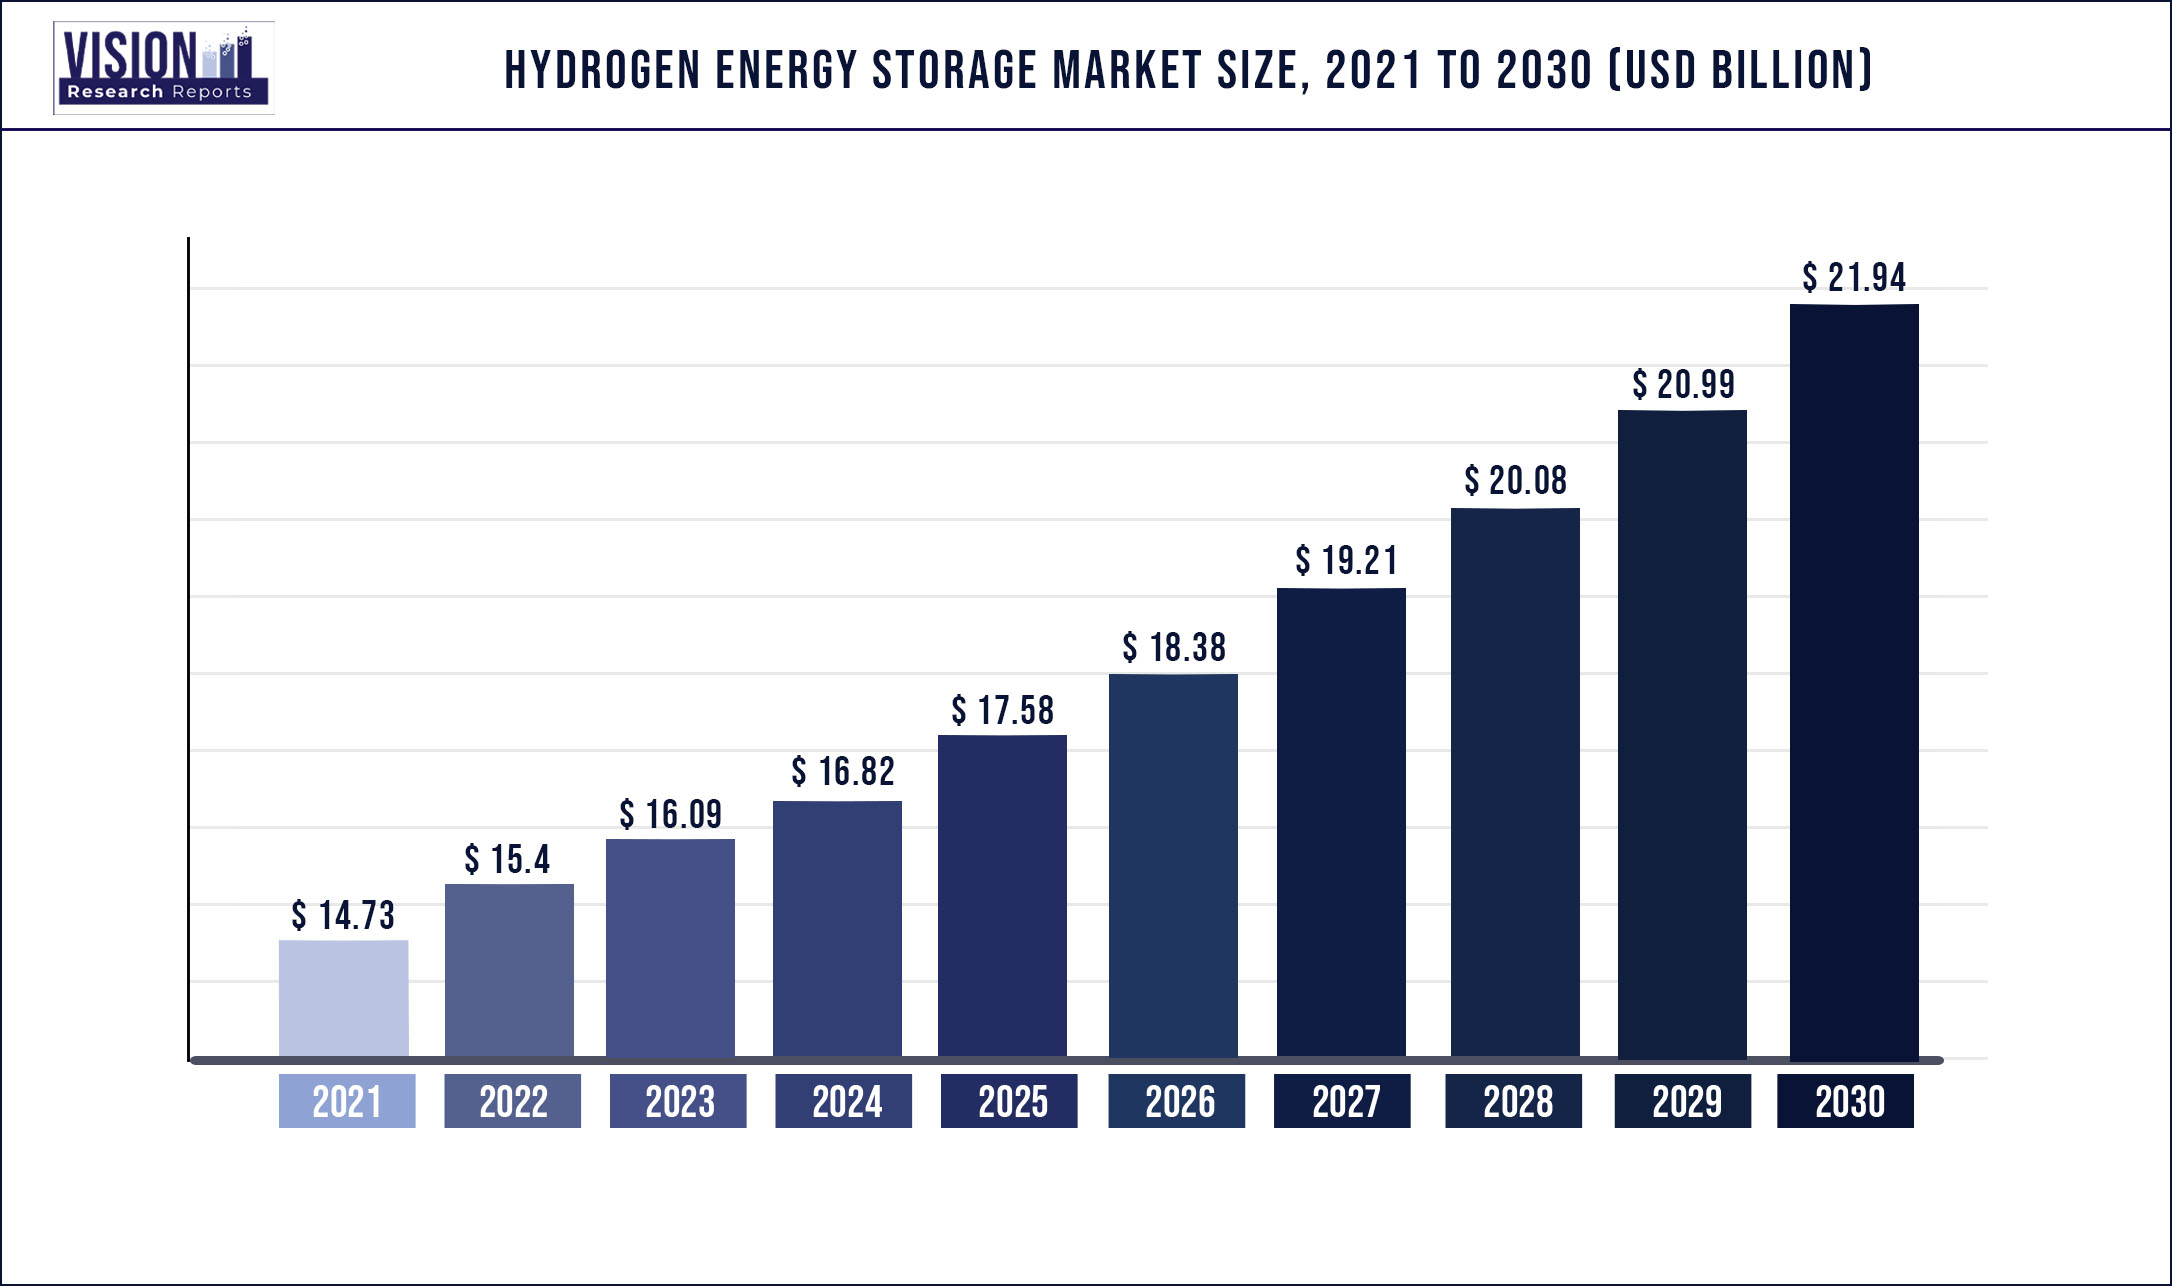 Hydrogen Energy Storage Market Size 2021 to 2030